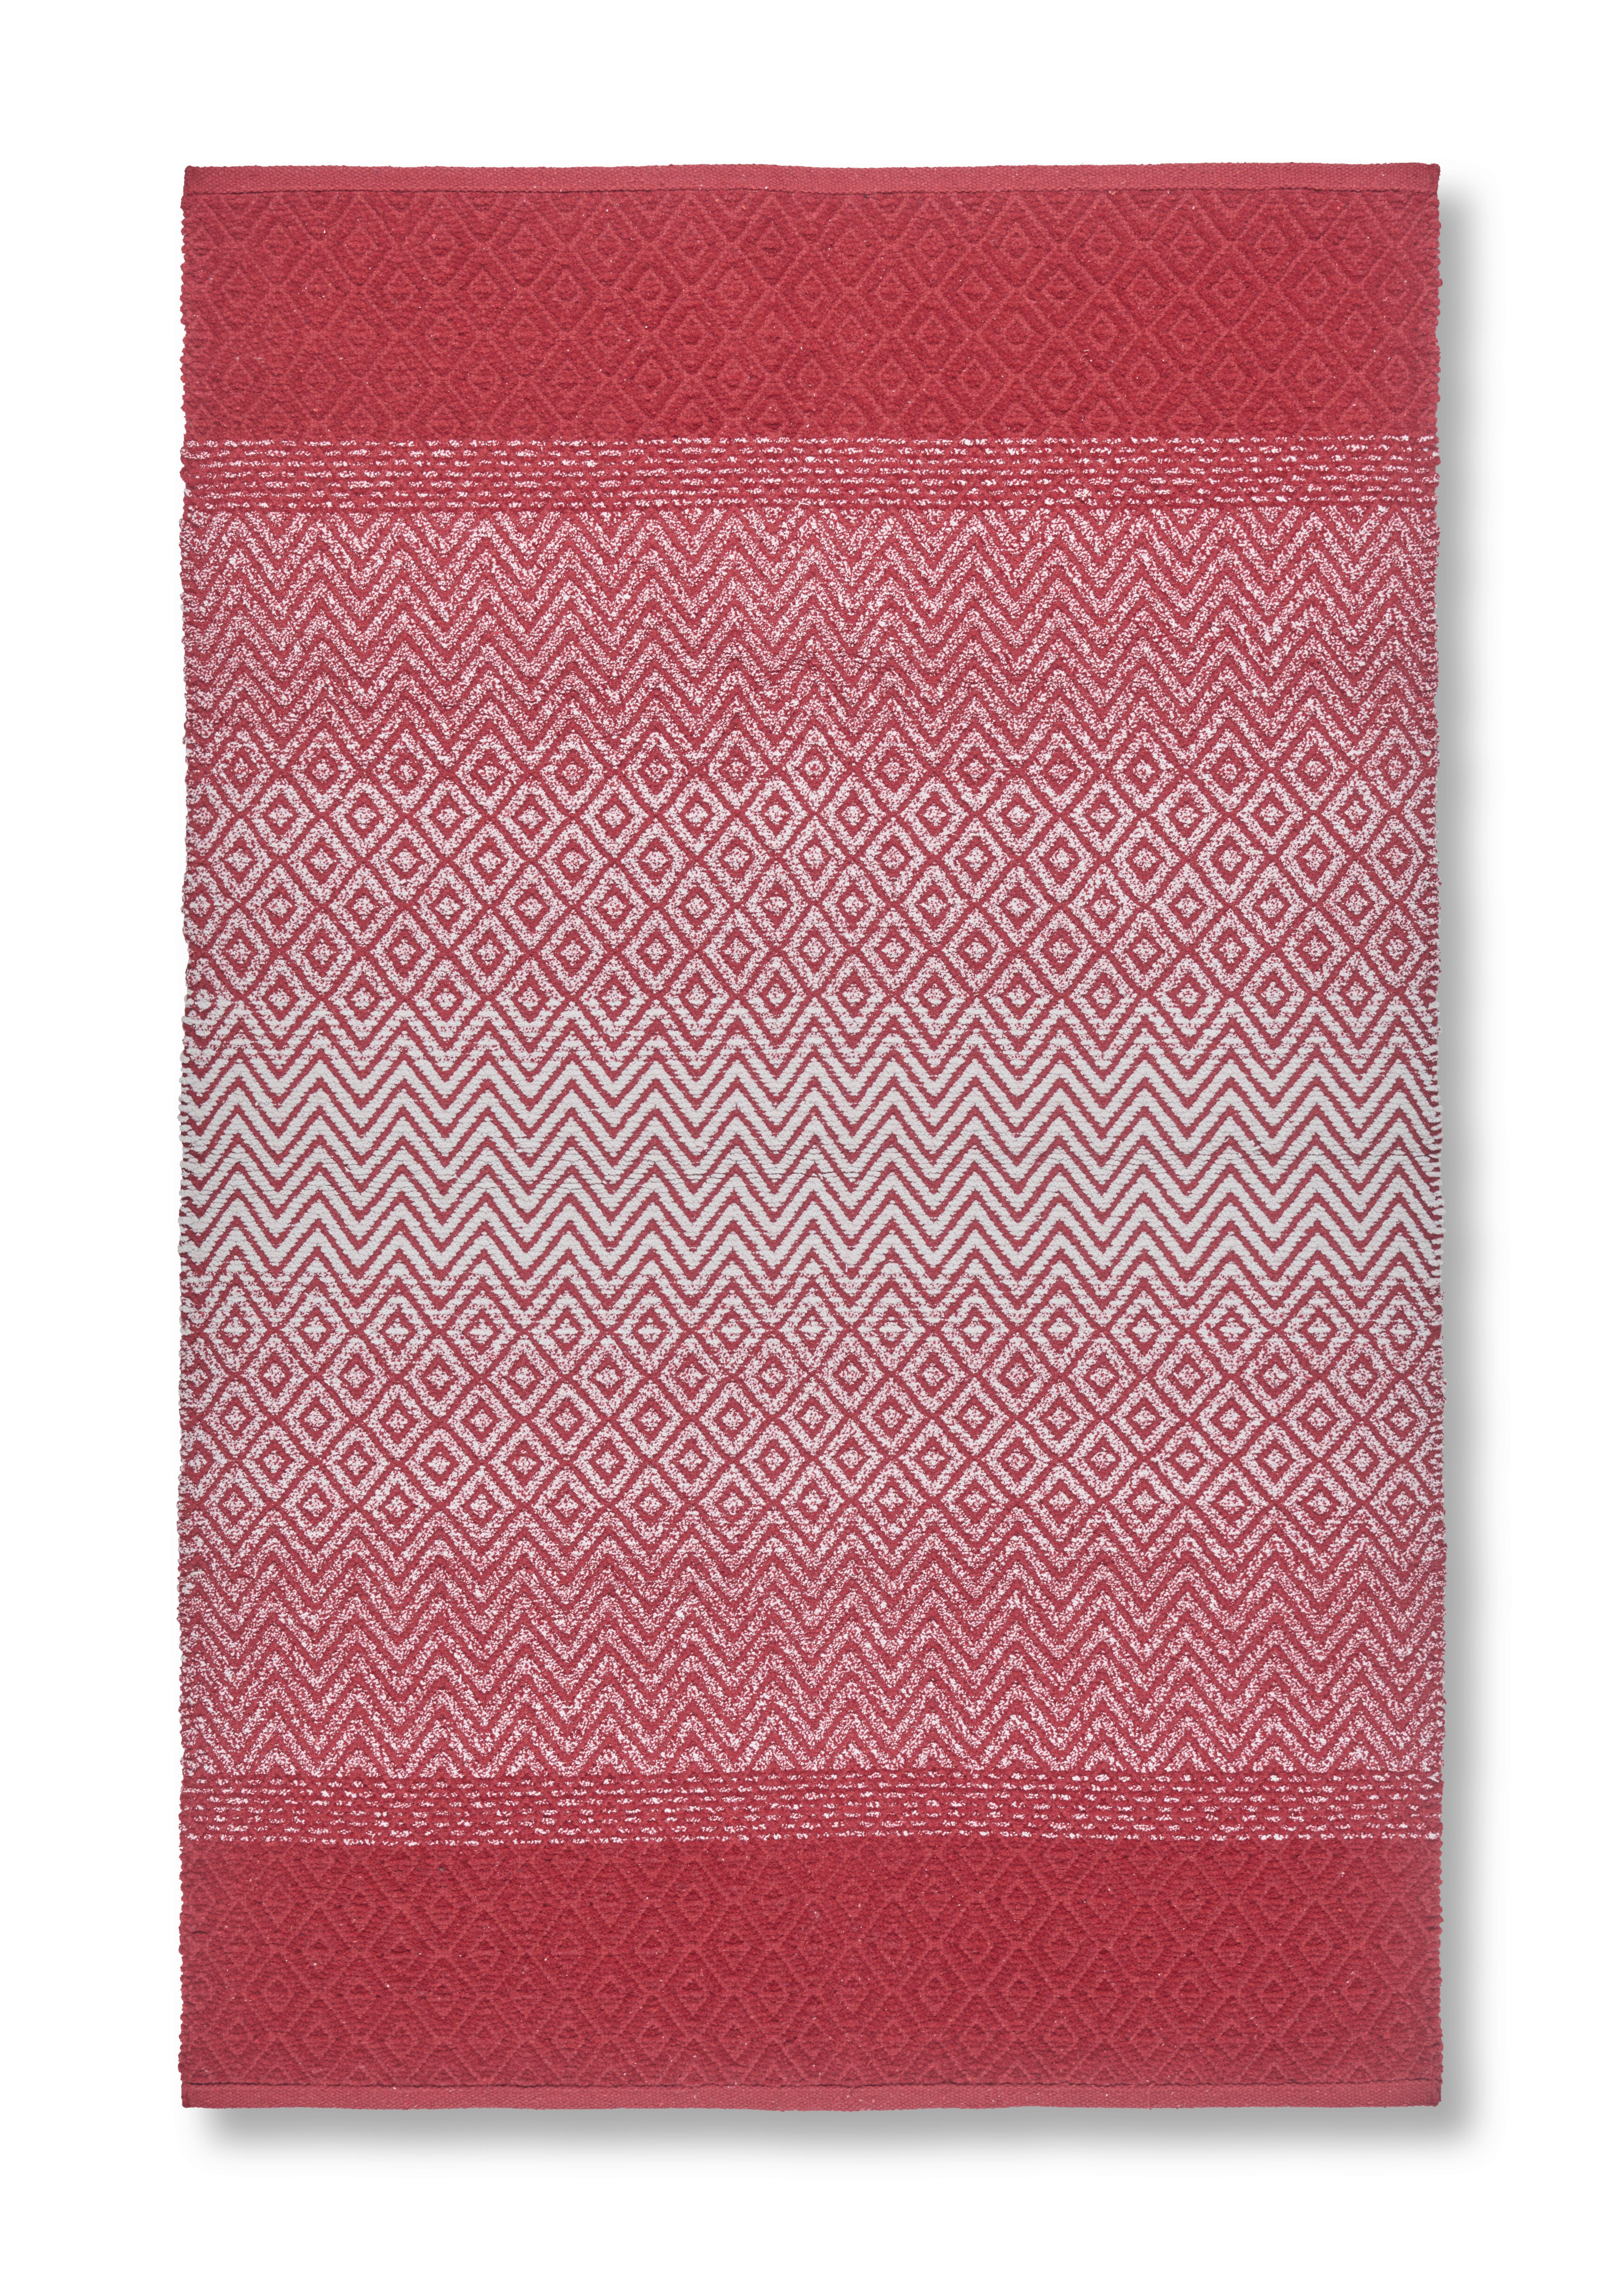 Tkaný Koberec Malta 2, 100/150cm, Červená - červená, Basics, textil (100/150cm) - Modern Living